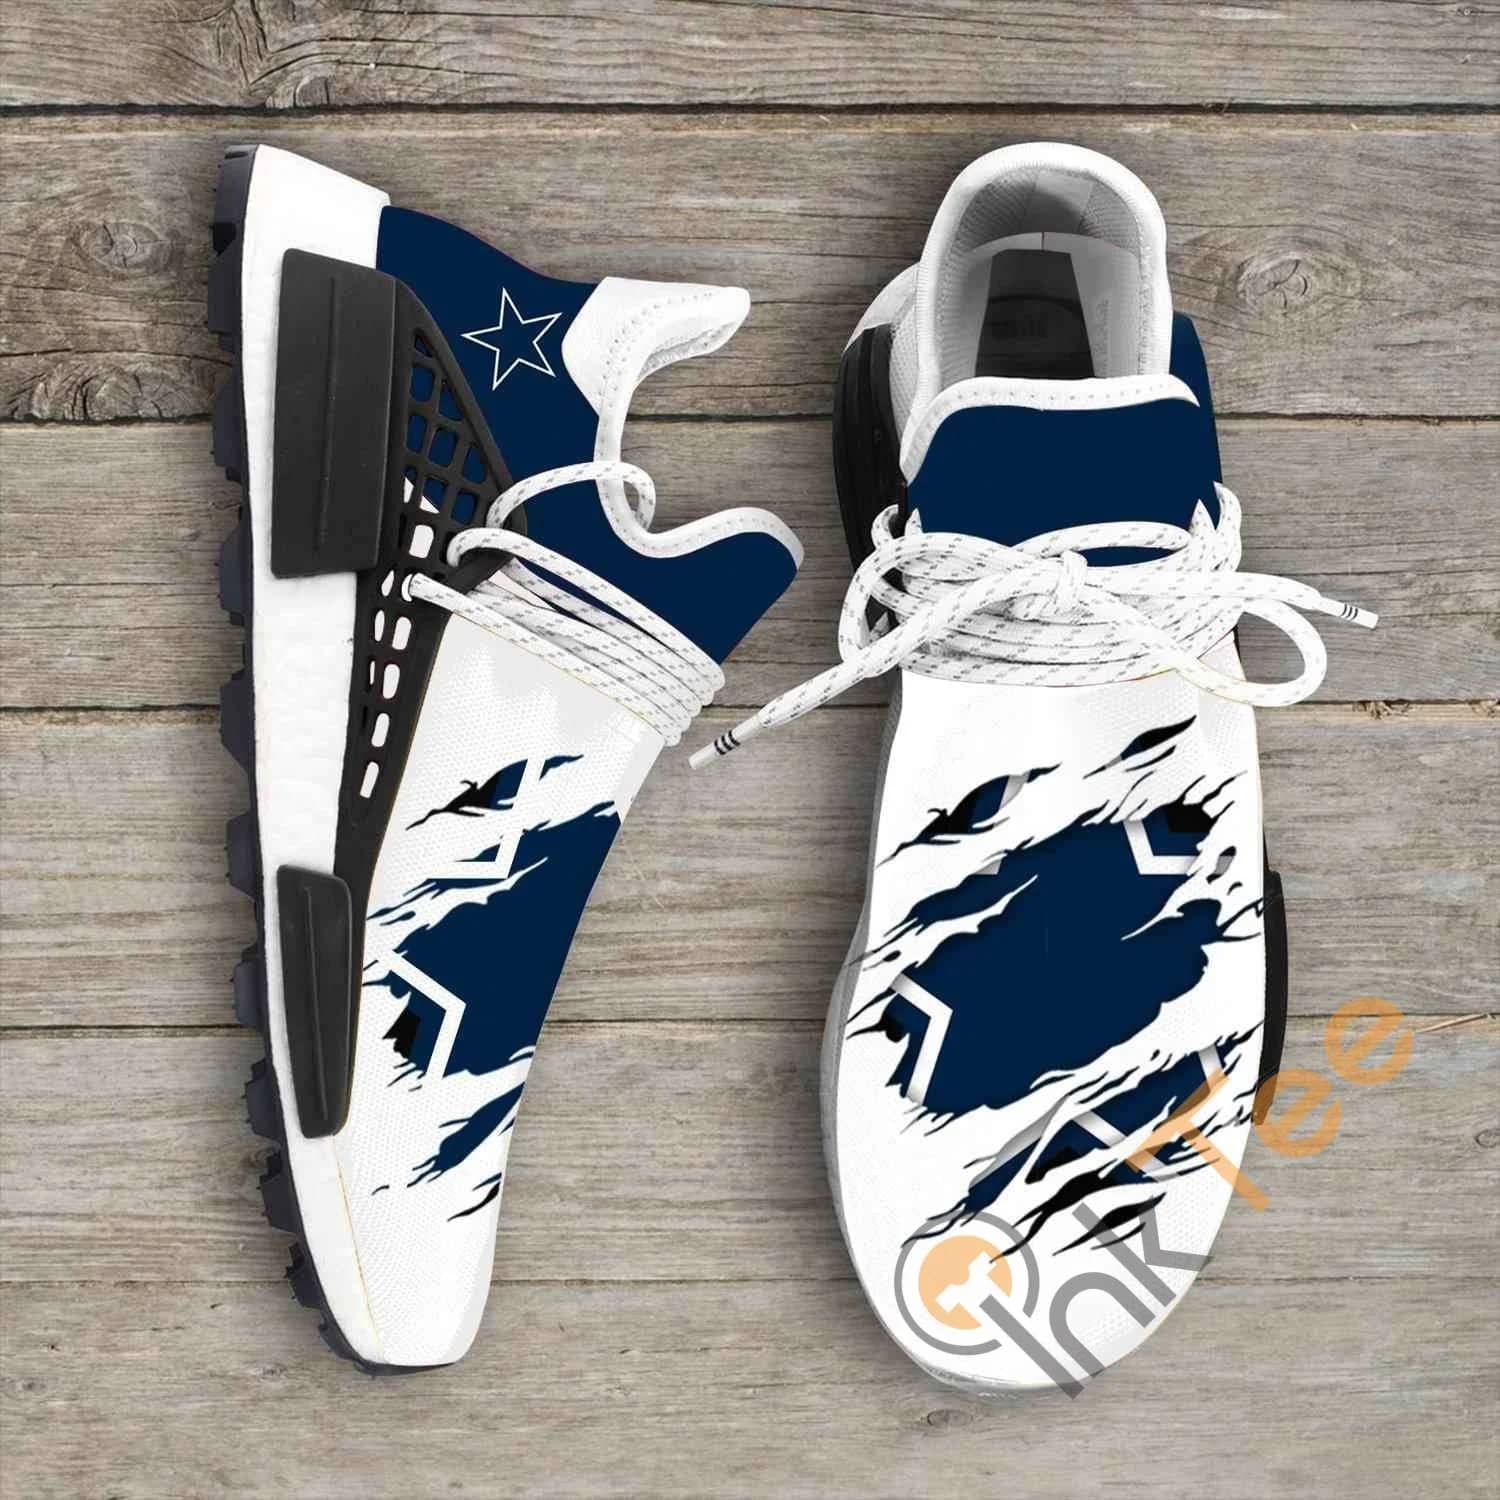 Dallas Cowboys Nfl Ha03 NMD Human Shoes